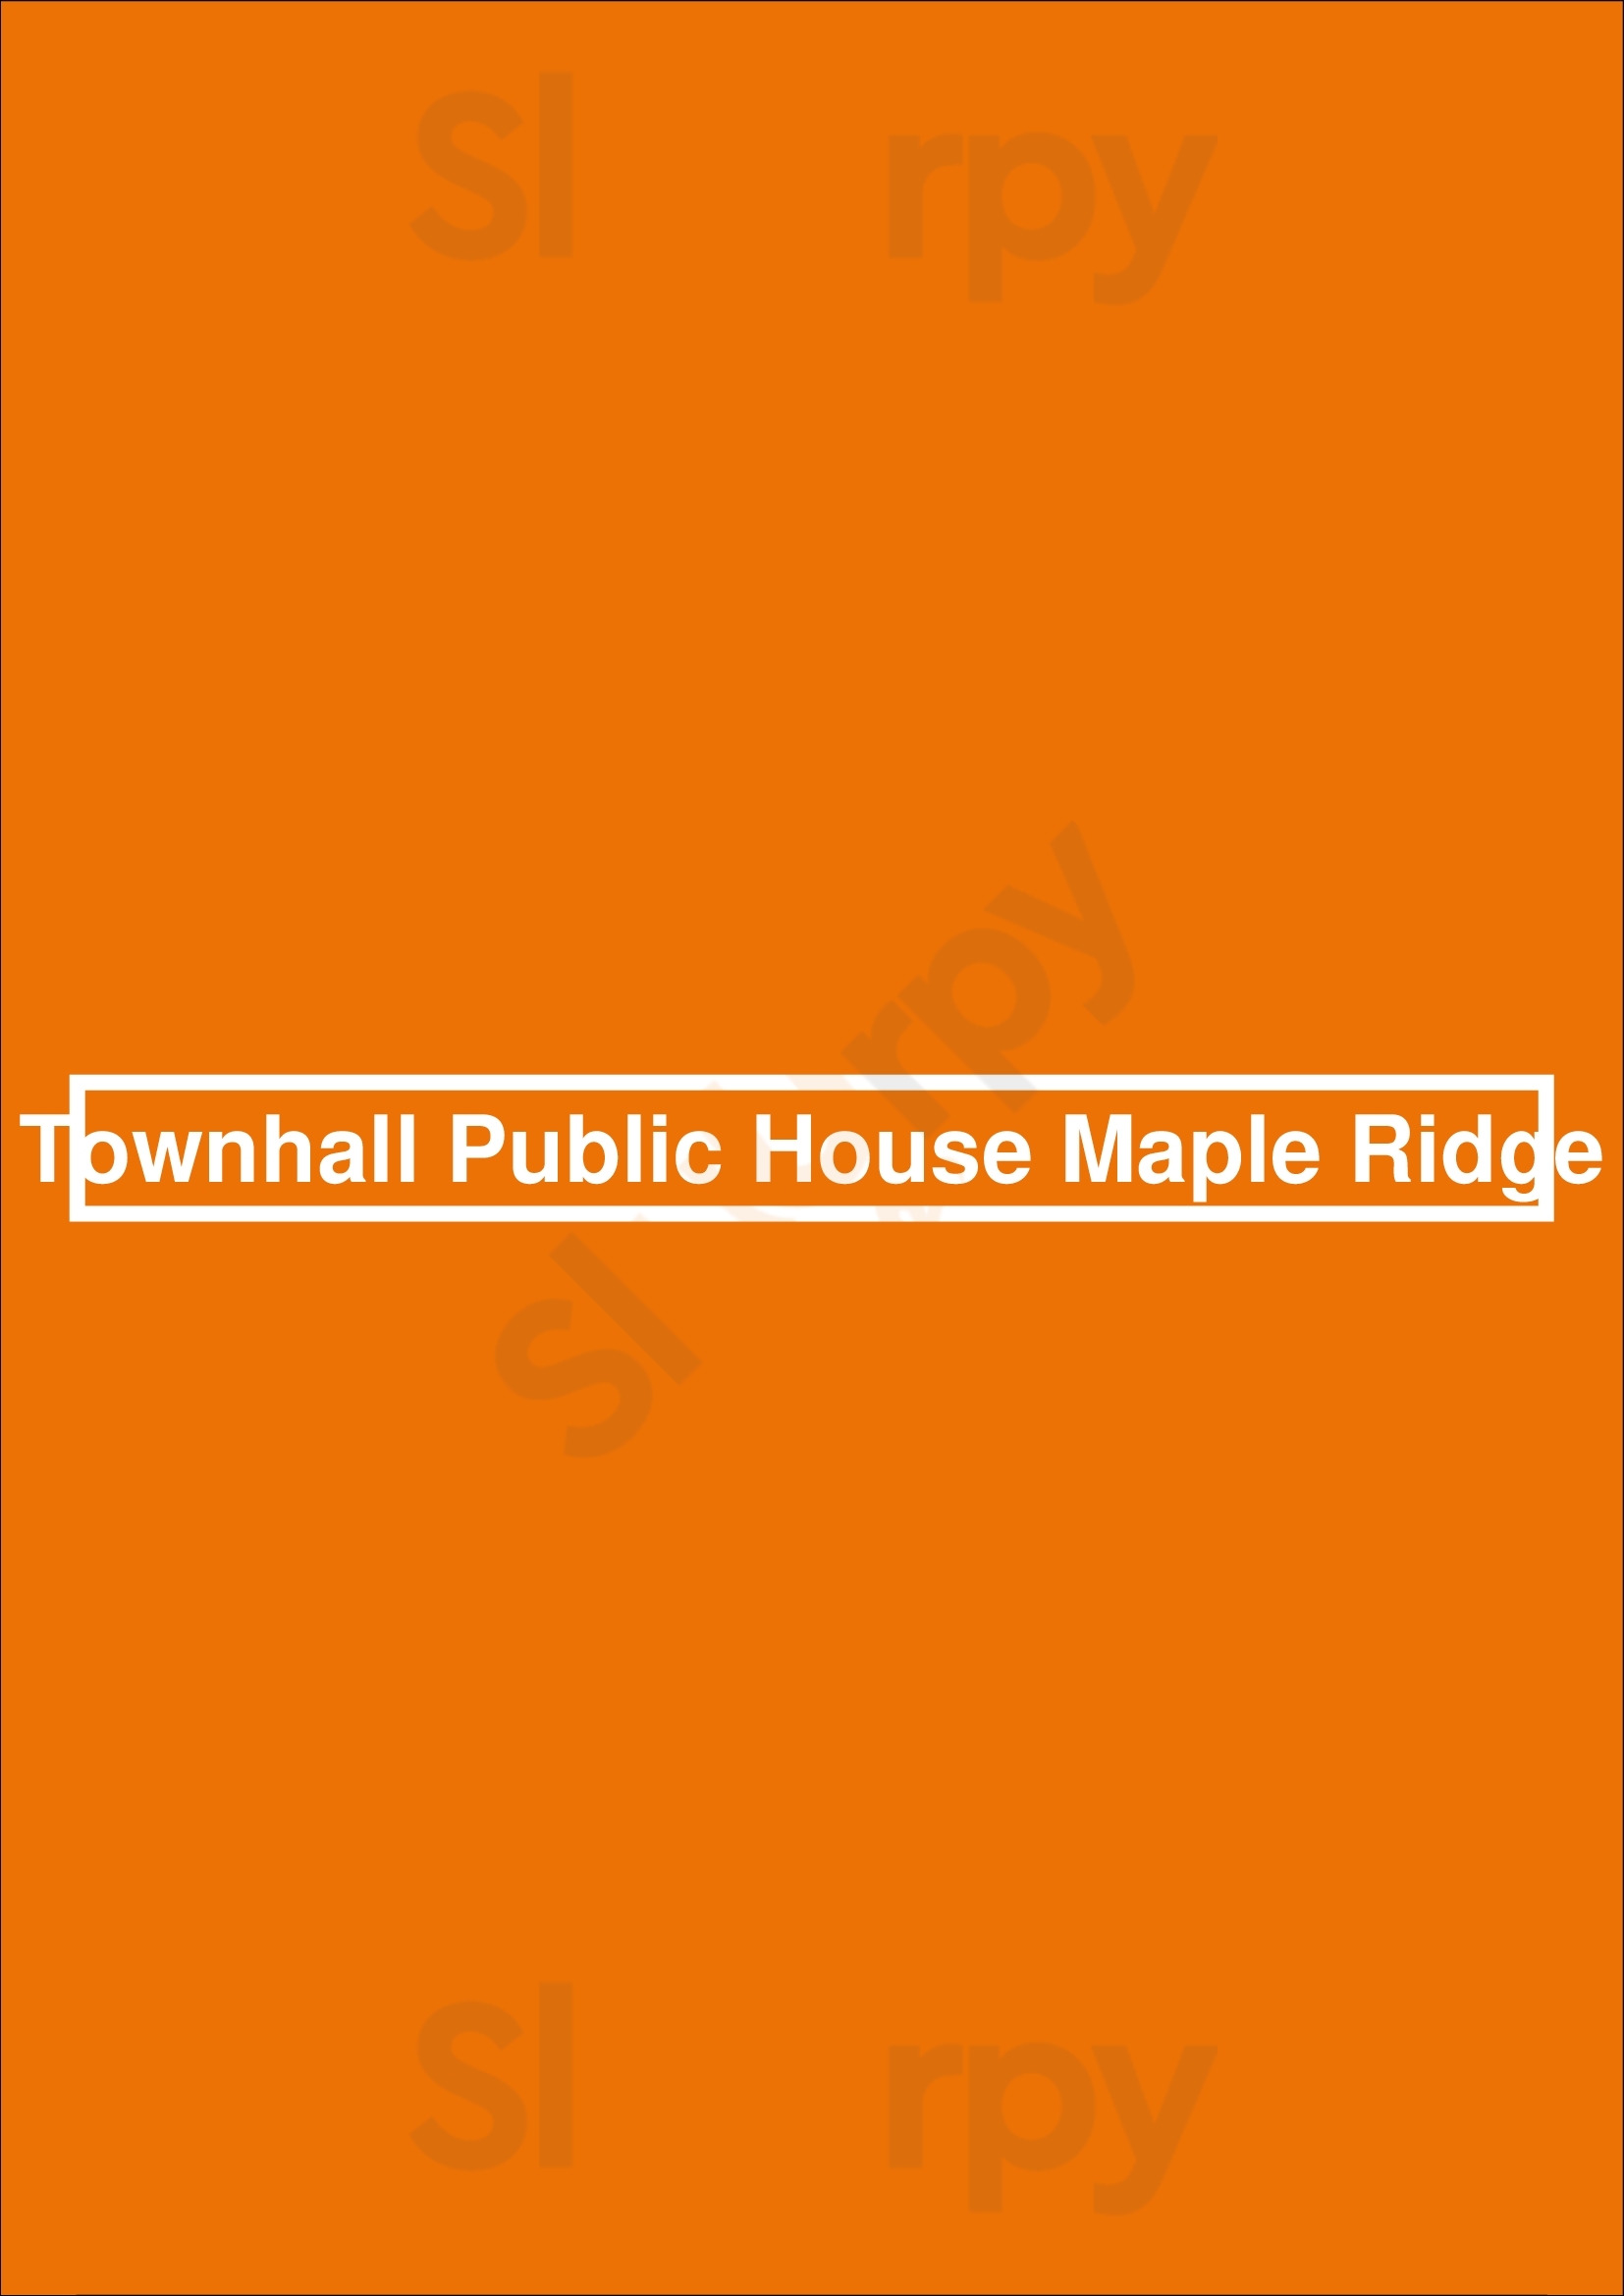 Townhall Maple Ridge Maple Ridge Menu - 1